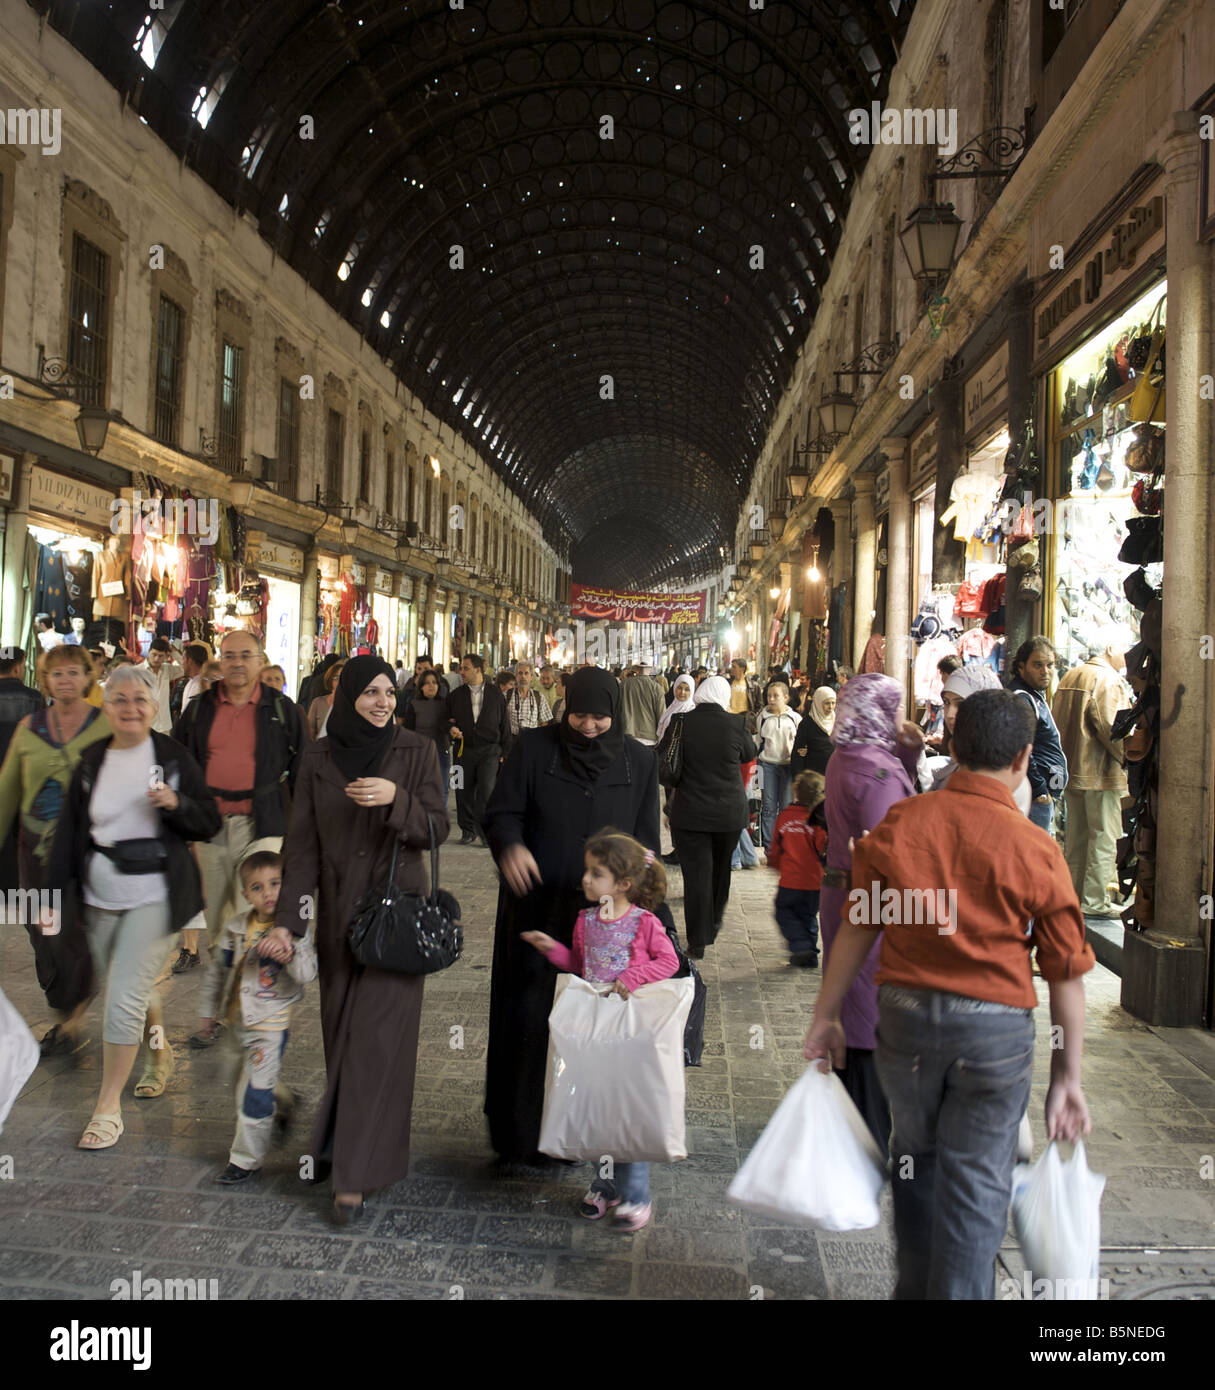 In alte Damascus weiber geile Reife geile